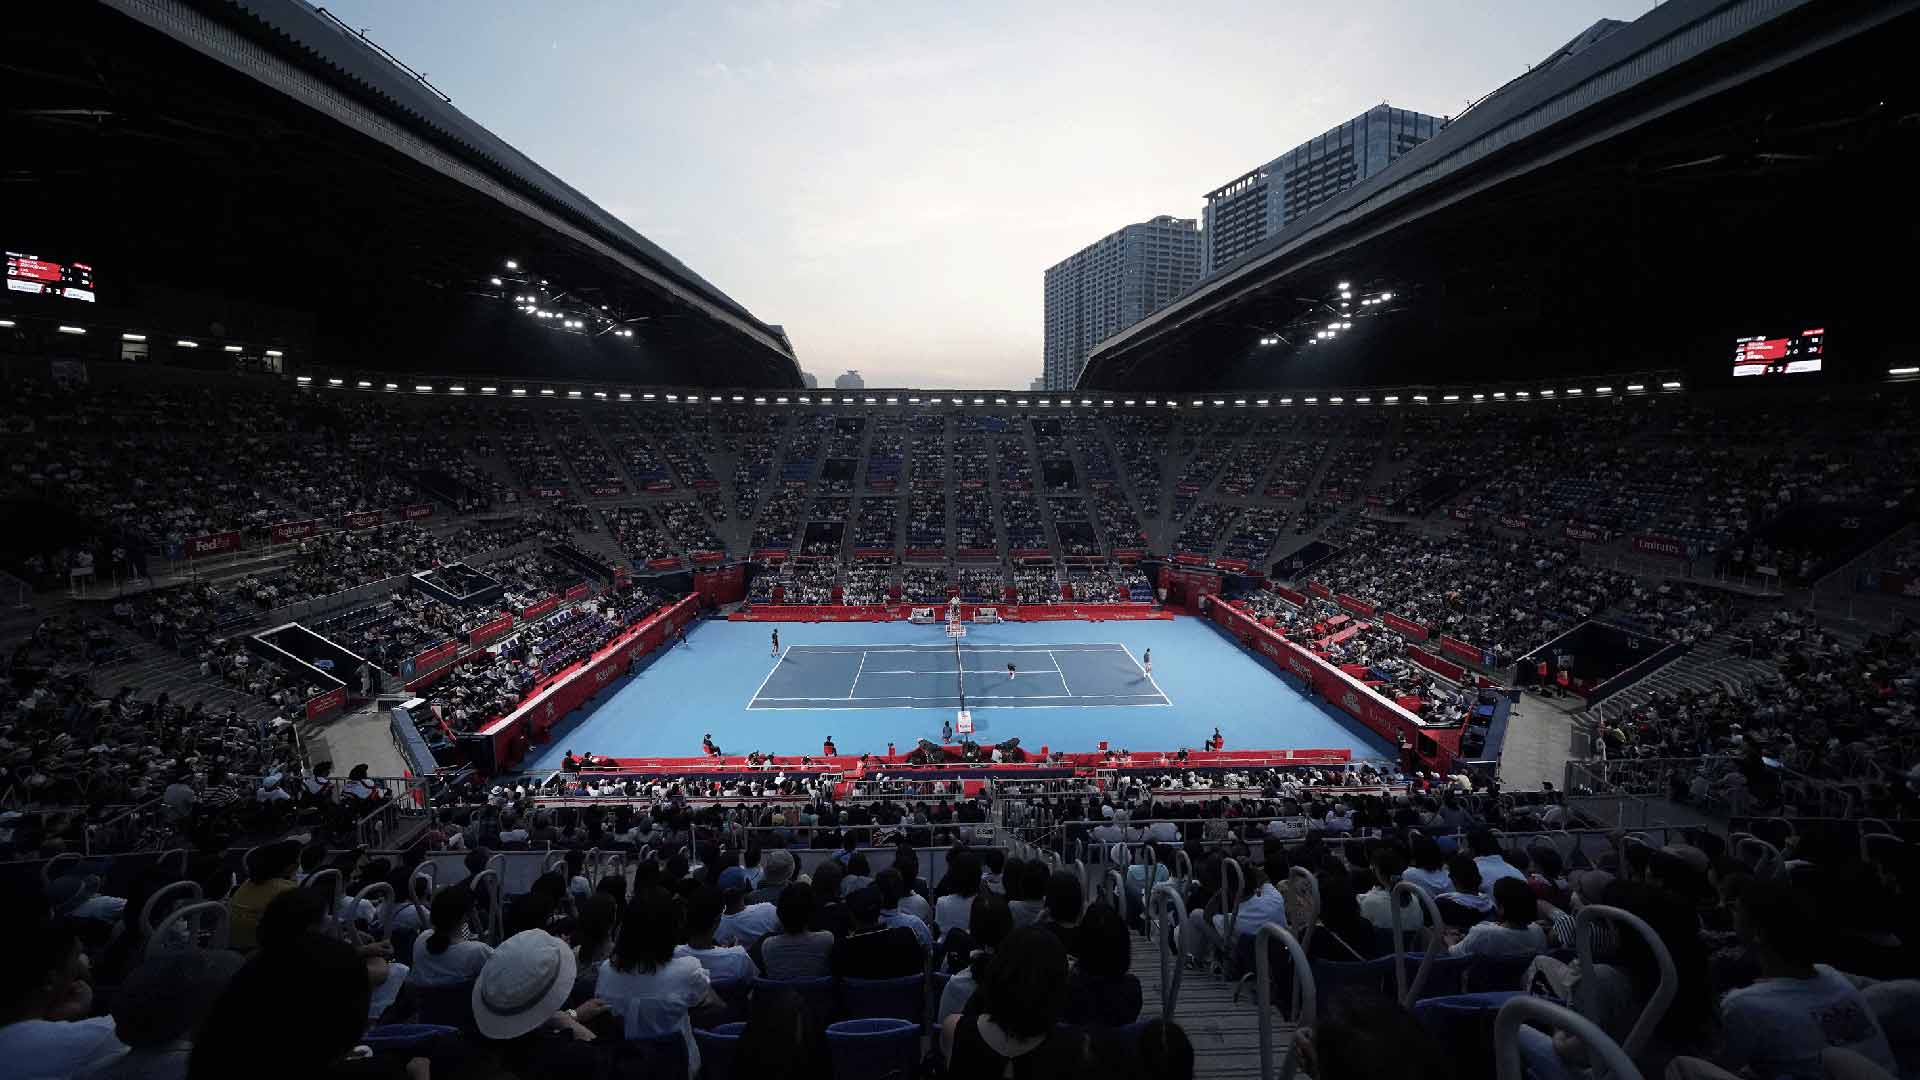 Longest tennis match records - Wikipedia